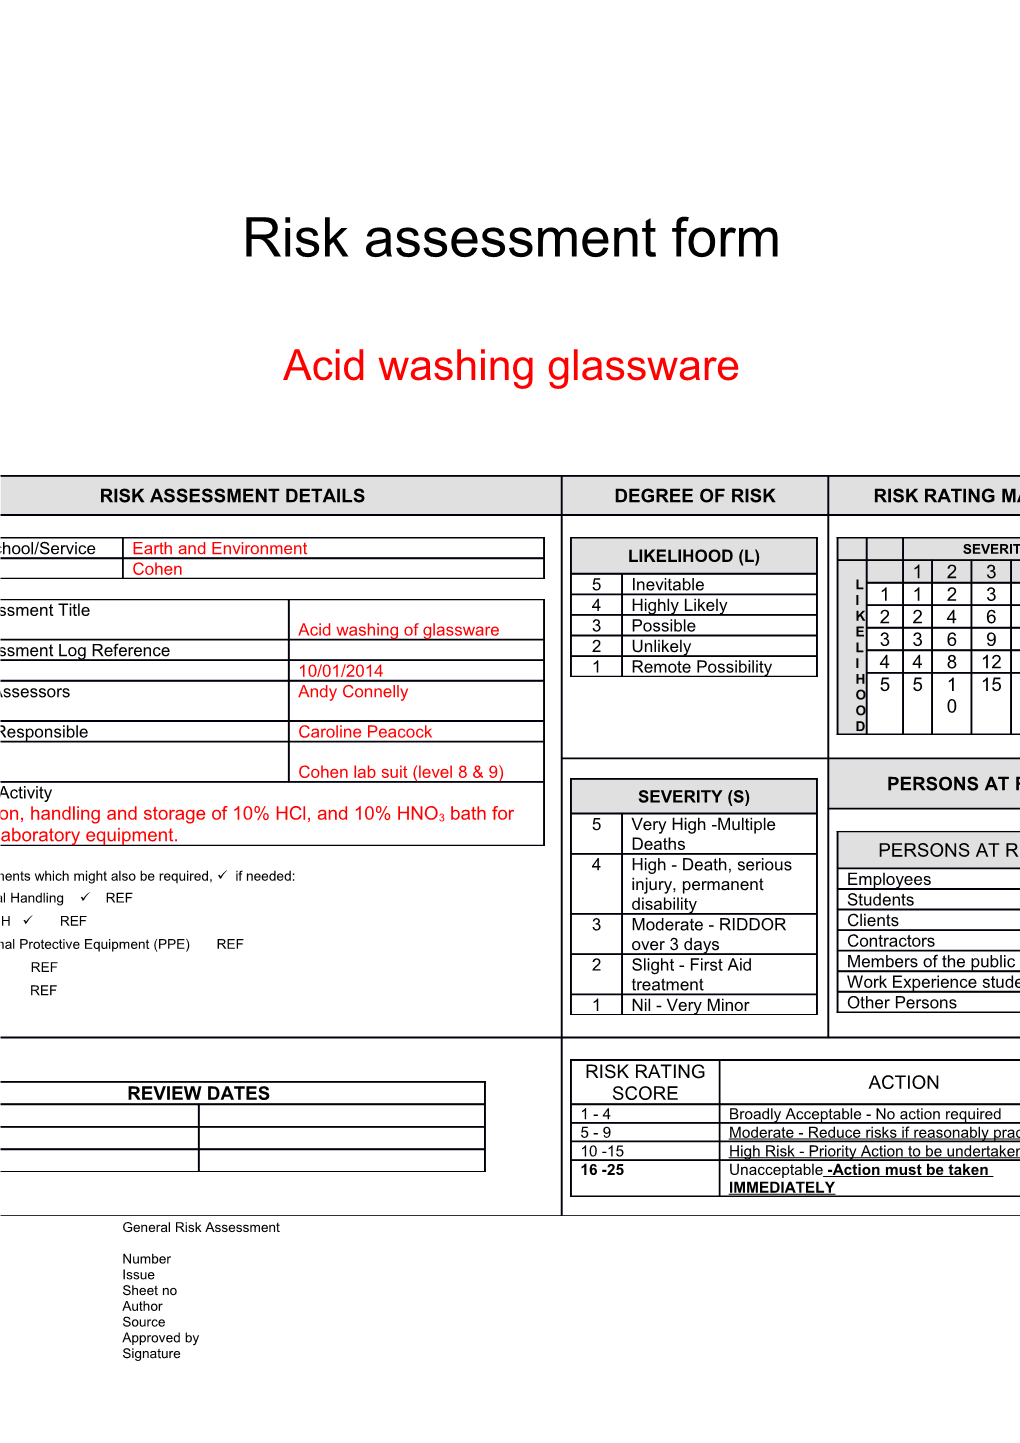 Risk Assessment Form s19